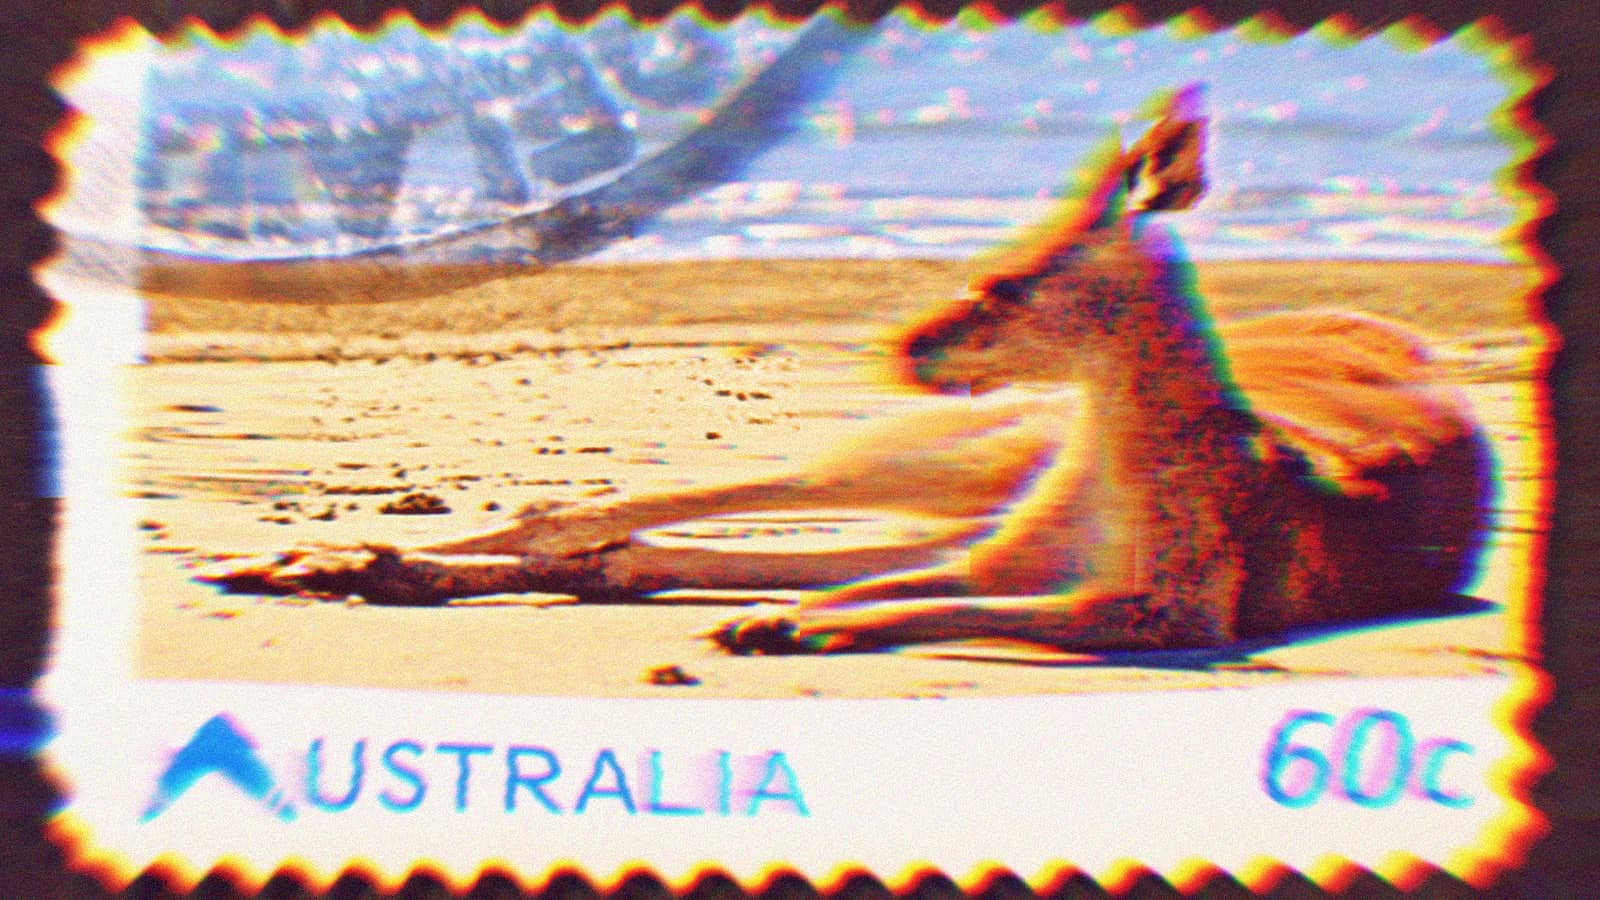 Australian 60c postage stamp depicting a kangaroo laying on the beach.